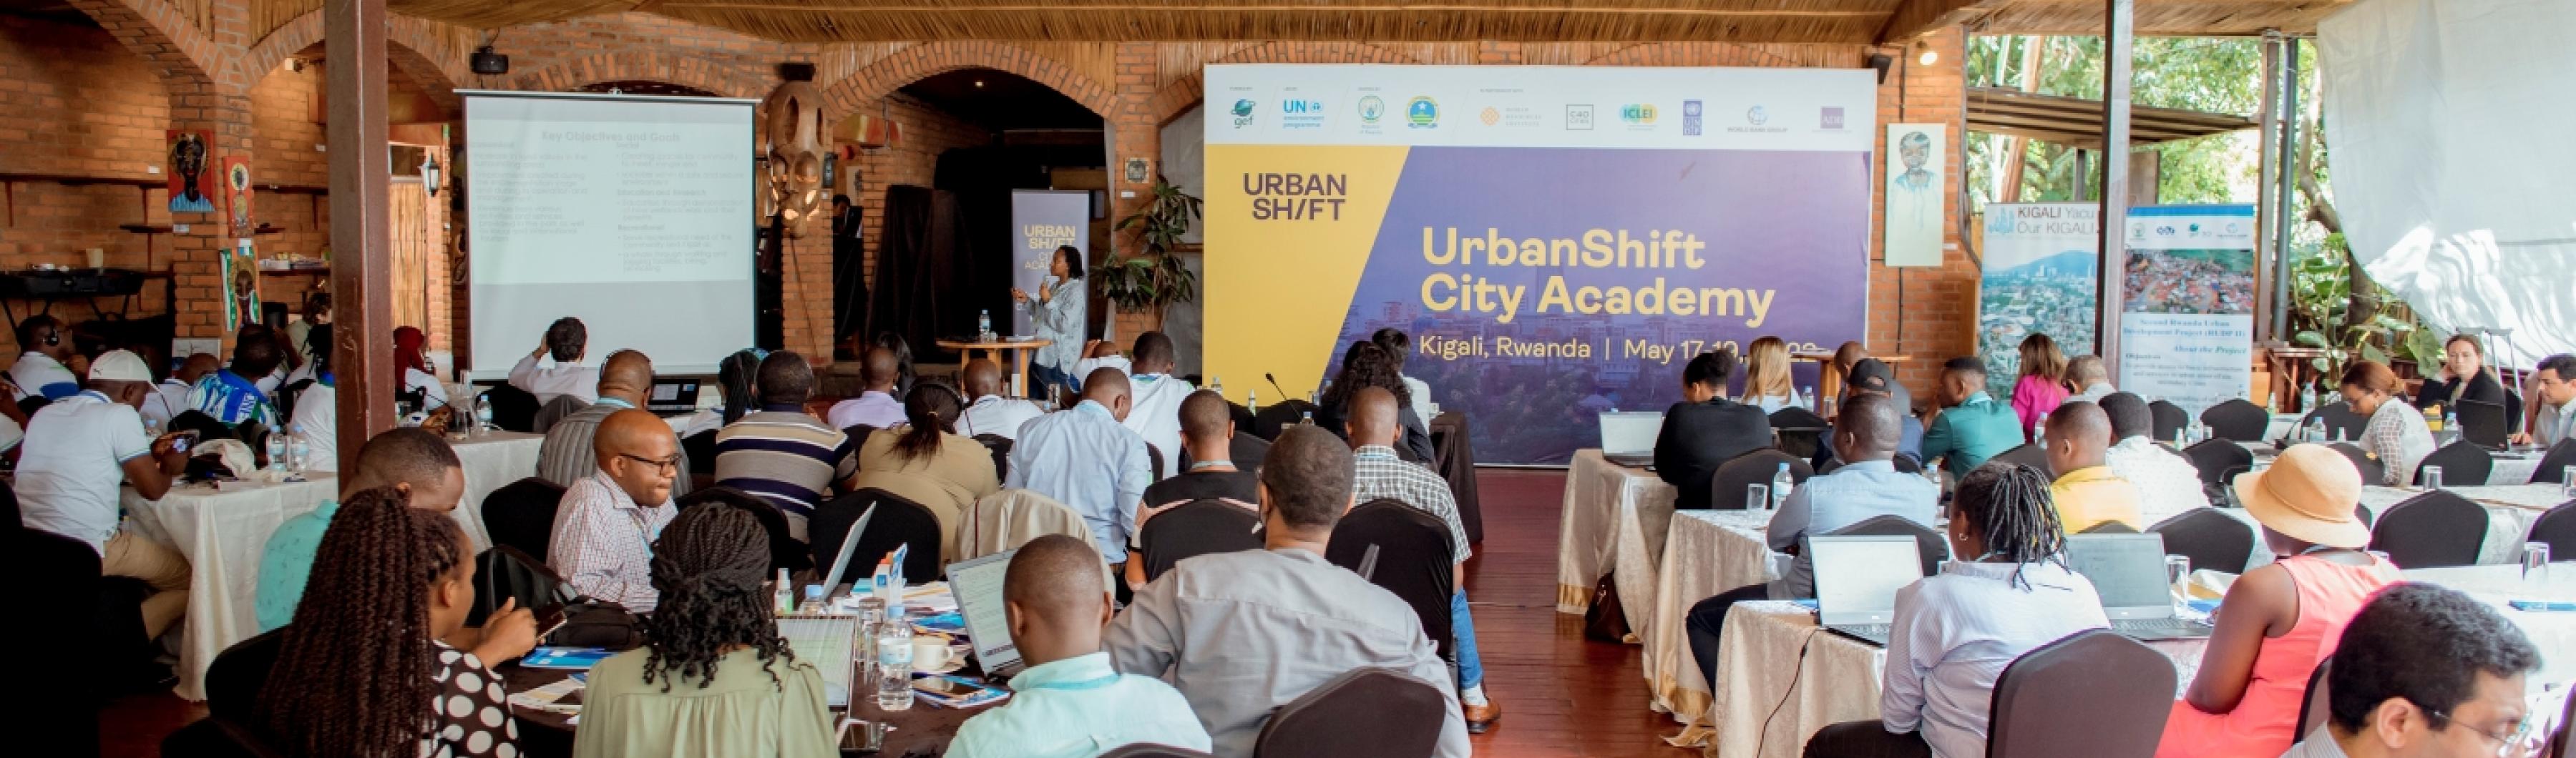 UrbanShift Académie de la ville de Kigali